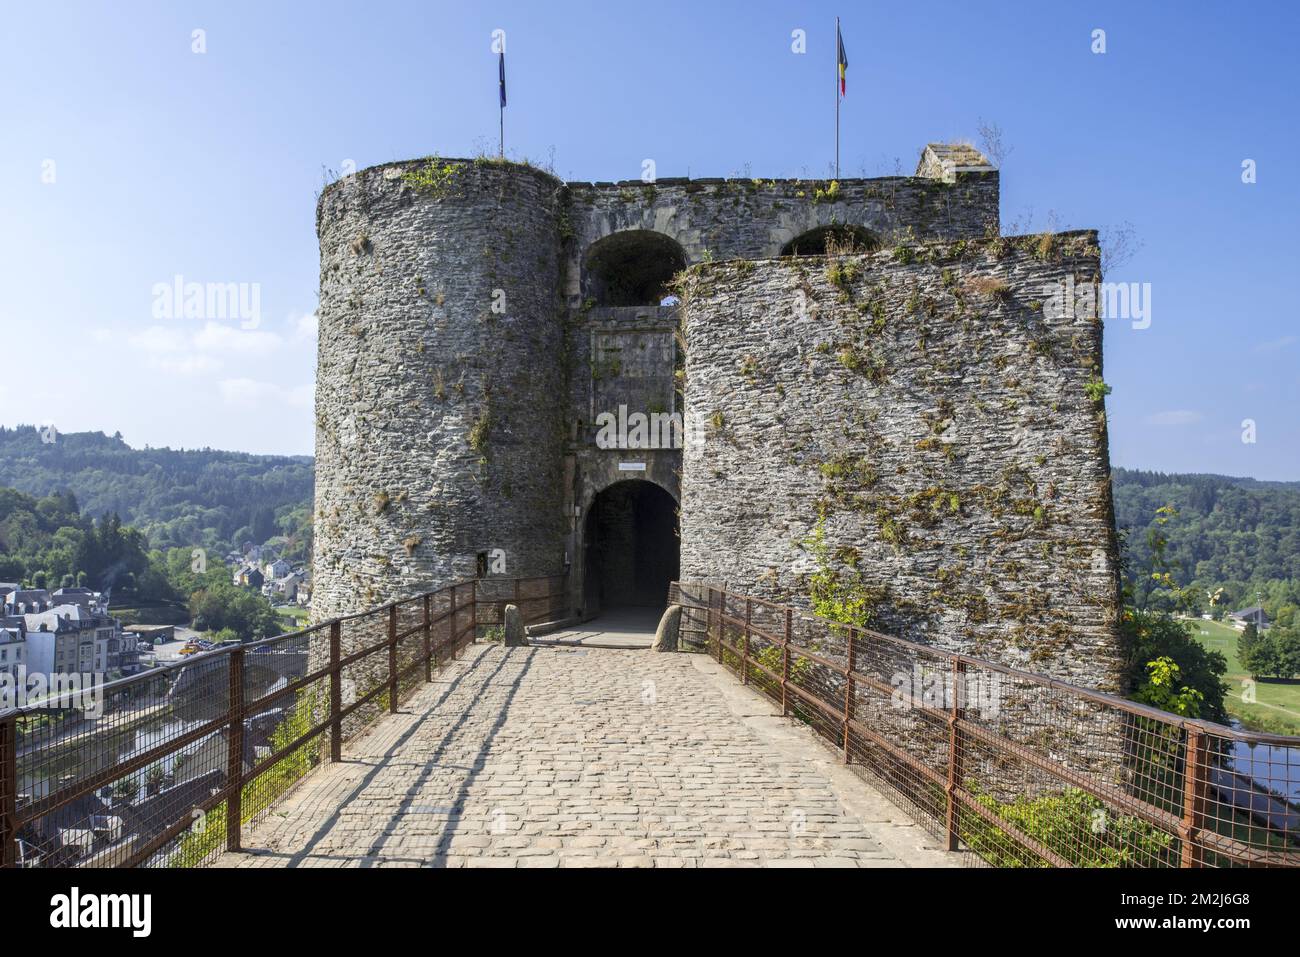 Eingangstor zum mittelalterlichen Schloss Château de Bouillon, Provinz Luxemburg, belgische Ardennen, Belgien | Château de Bouillon, Luxemburg, Ardennen, Belgique 24/08/2018 Stockfoto